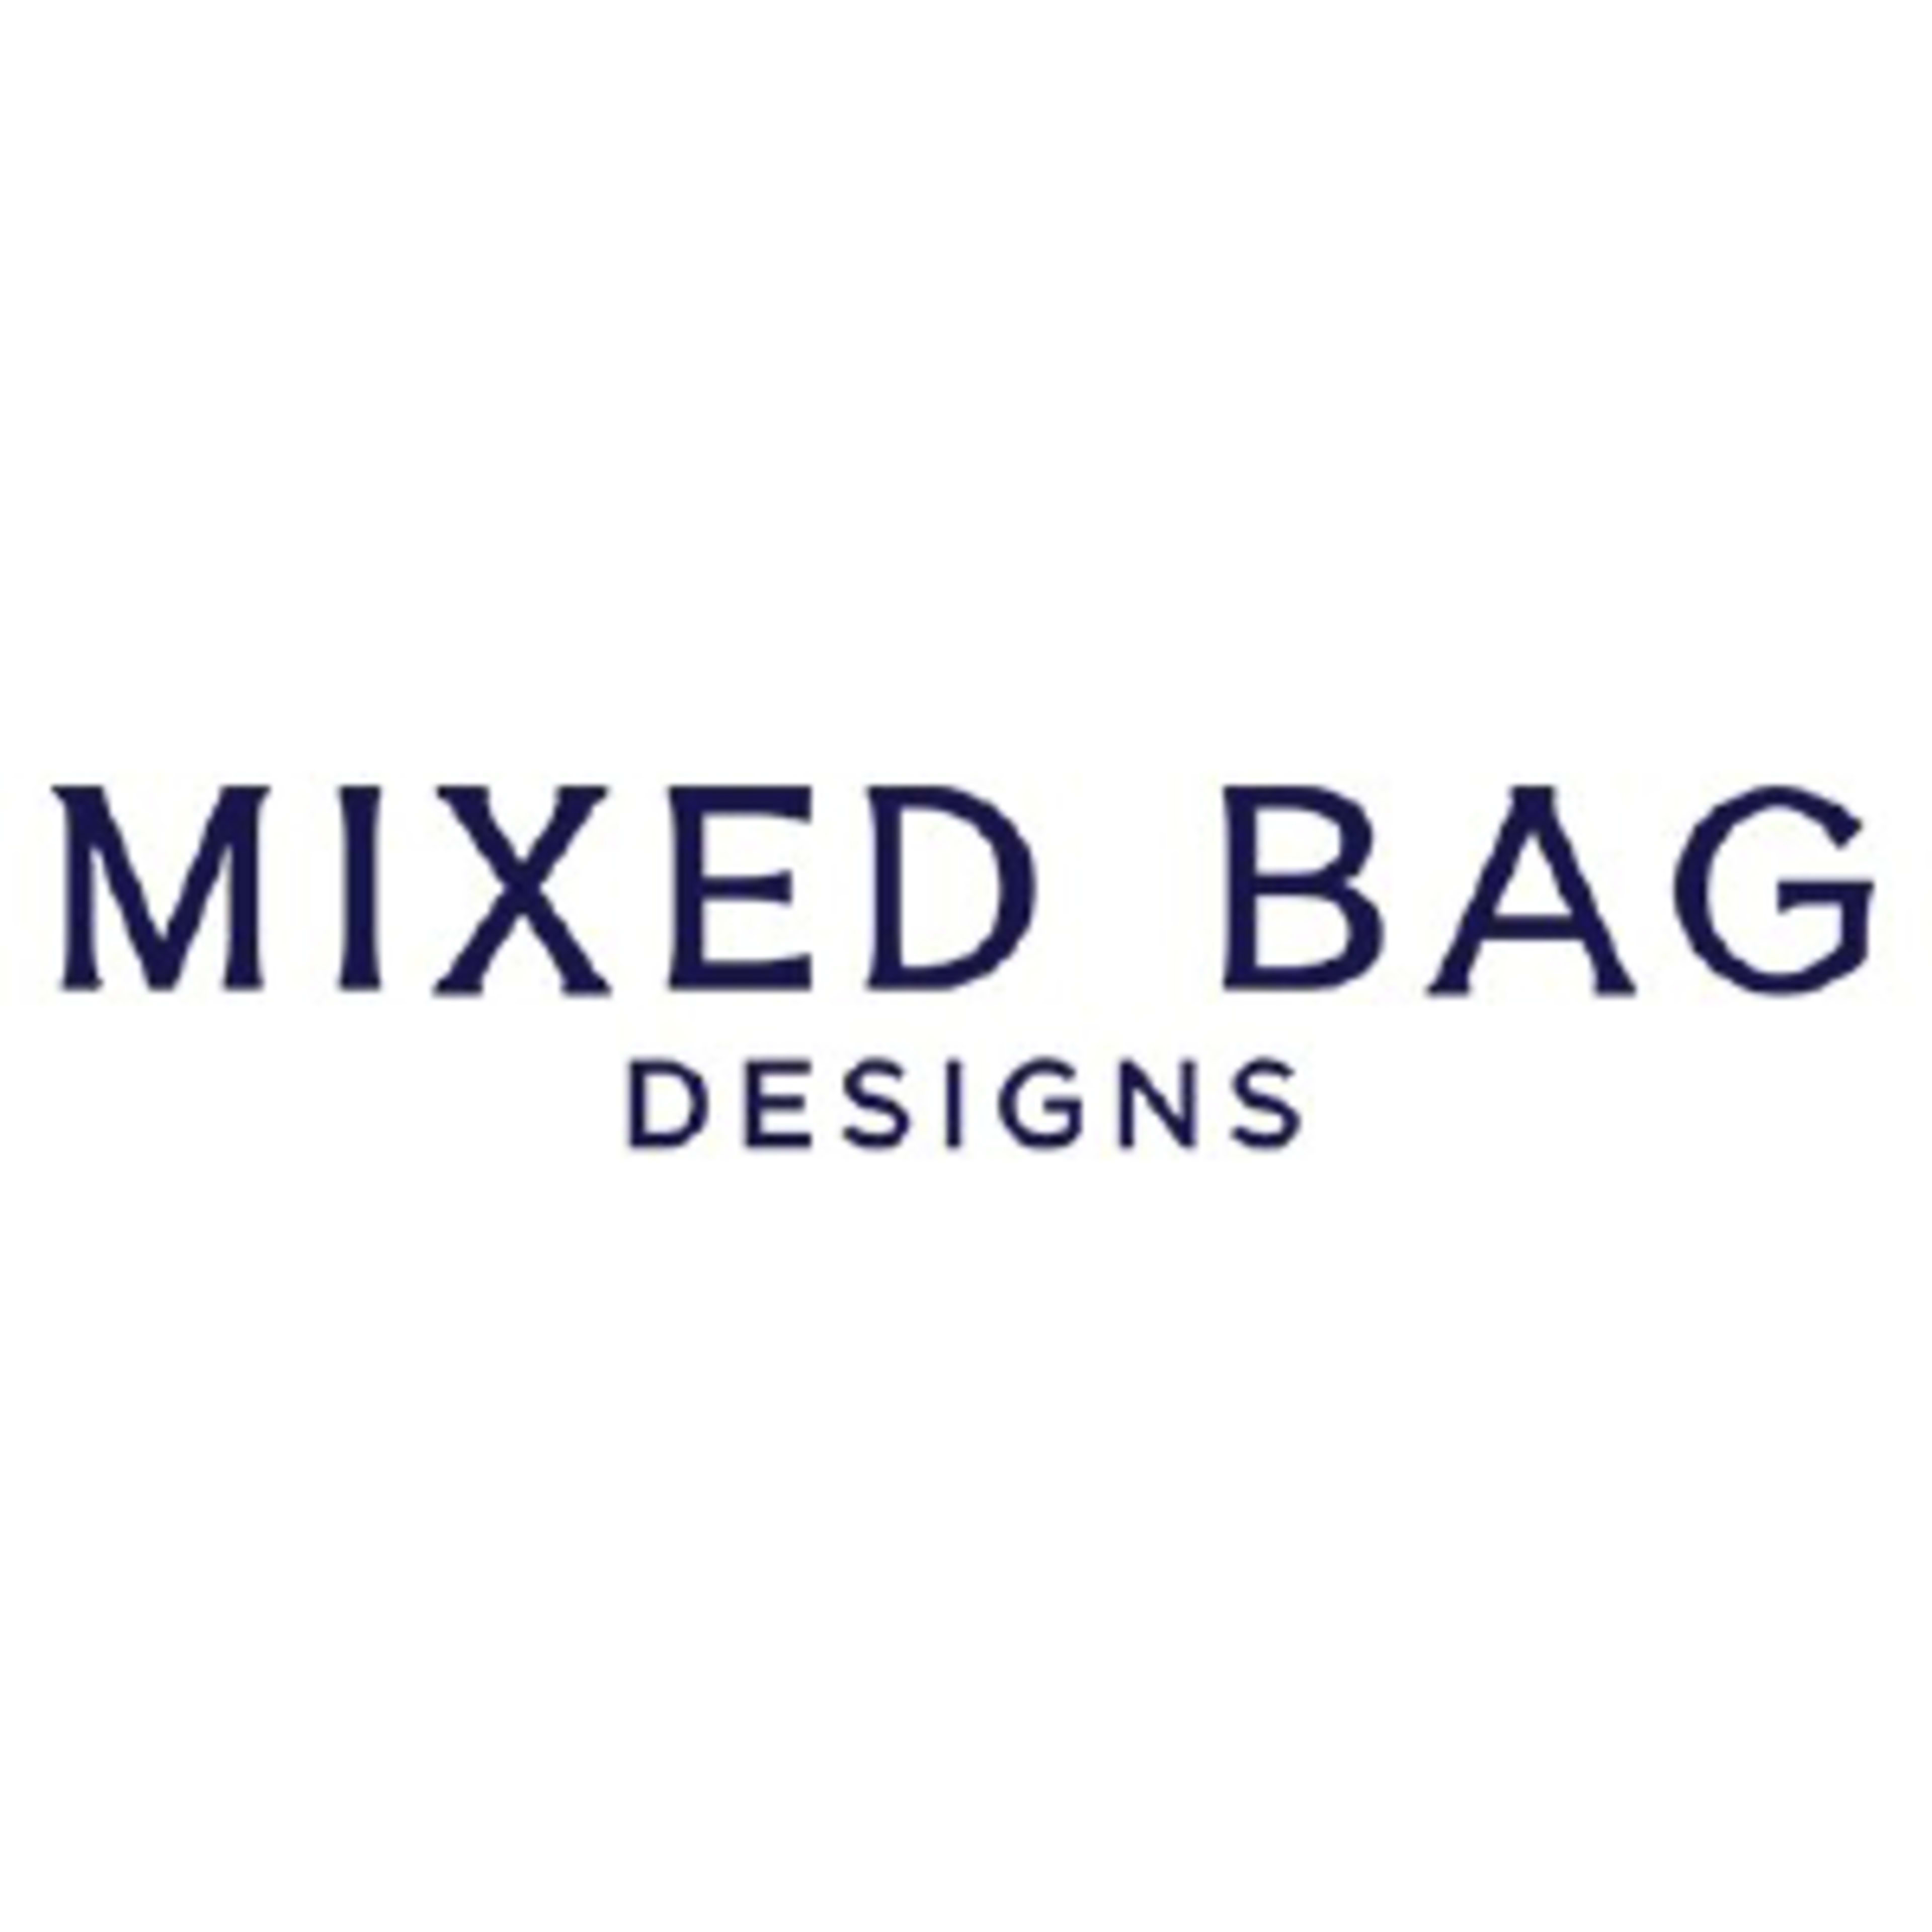 Mixed Bag DesignsCode